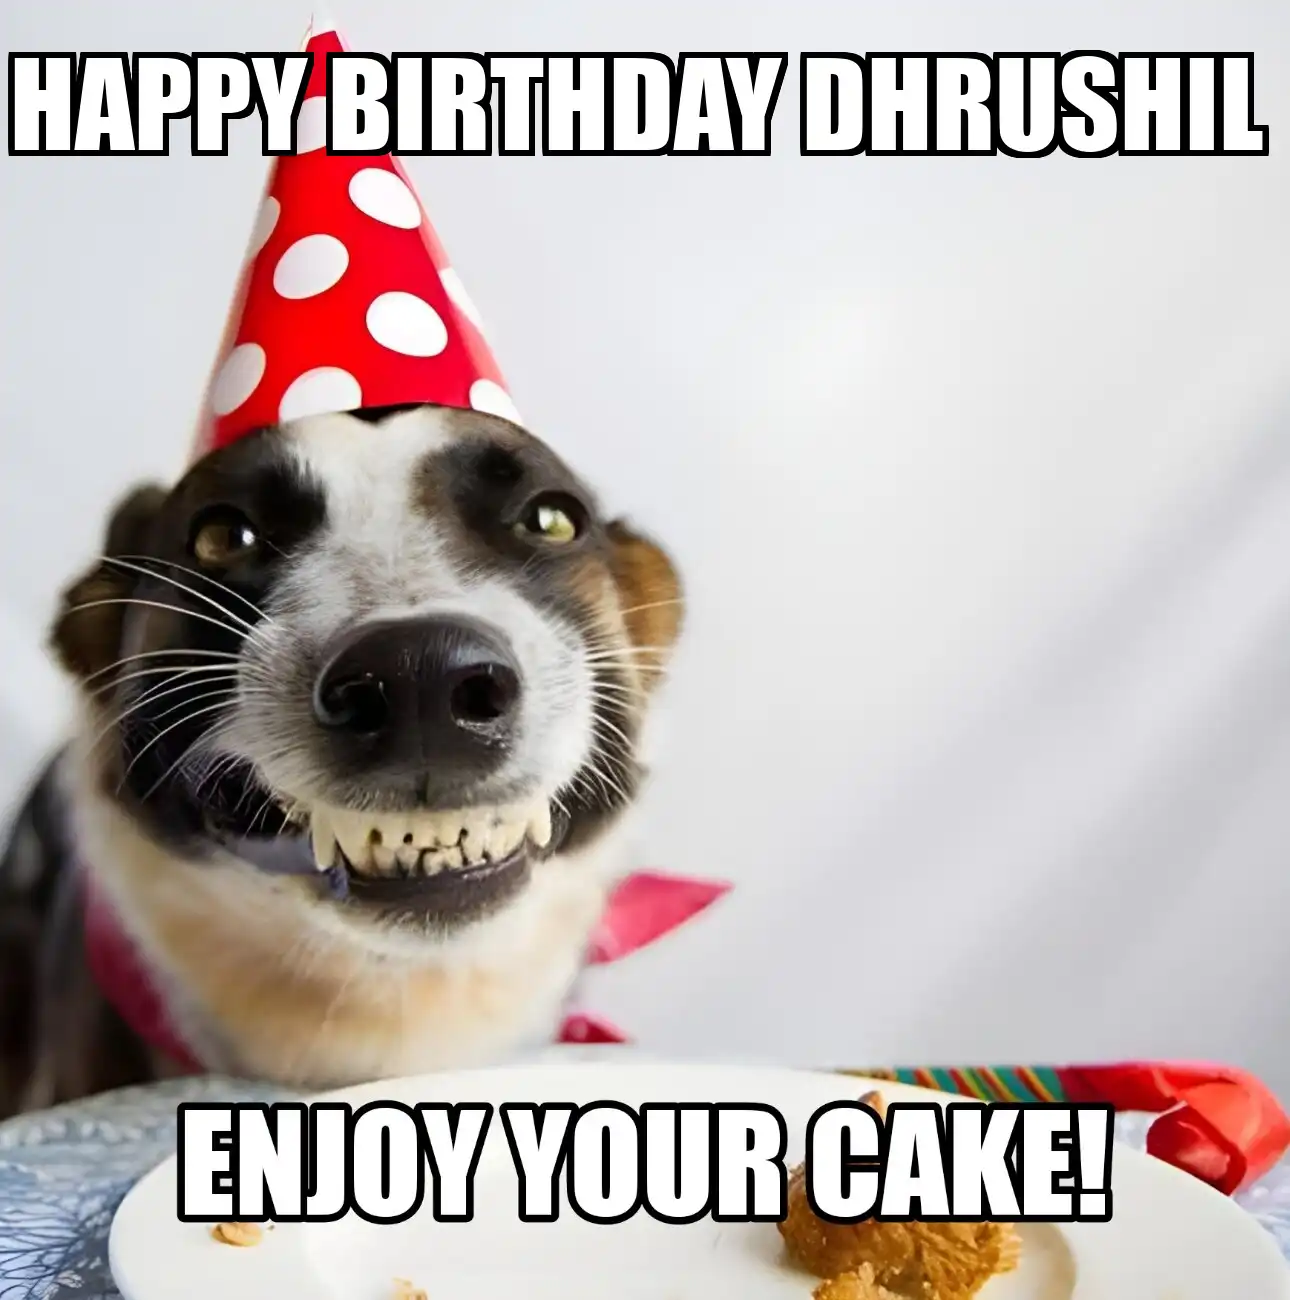 Happy Birthday Dhrushil Enjoy Your Cake Dog Meme